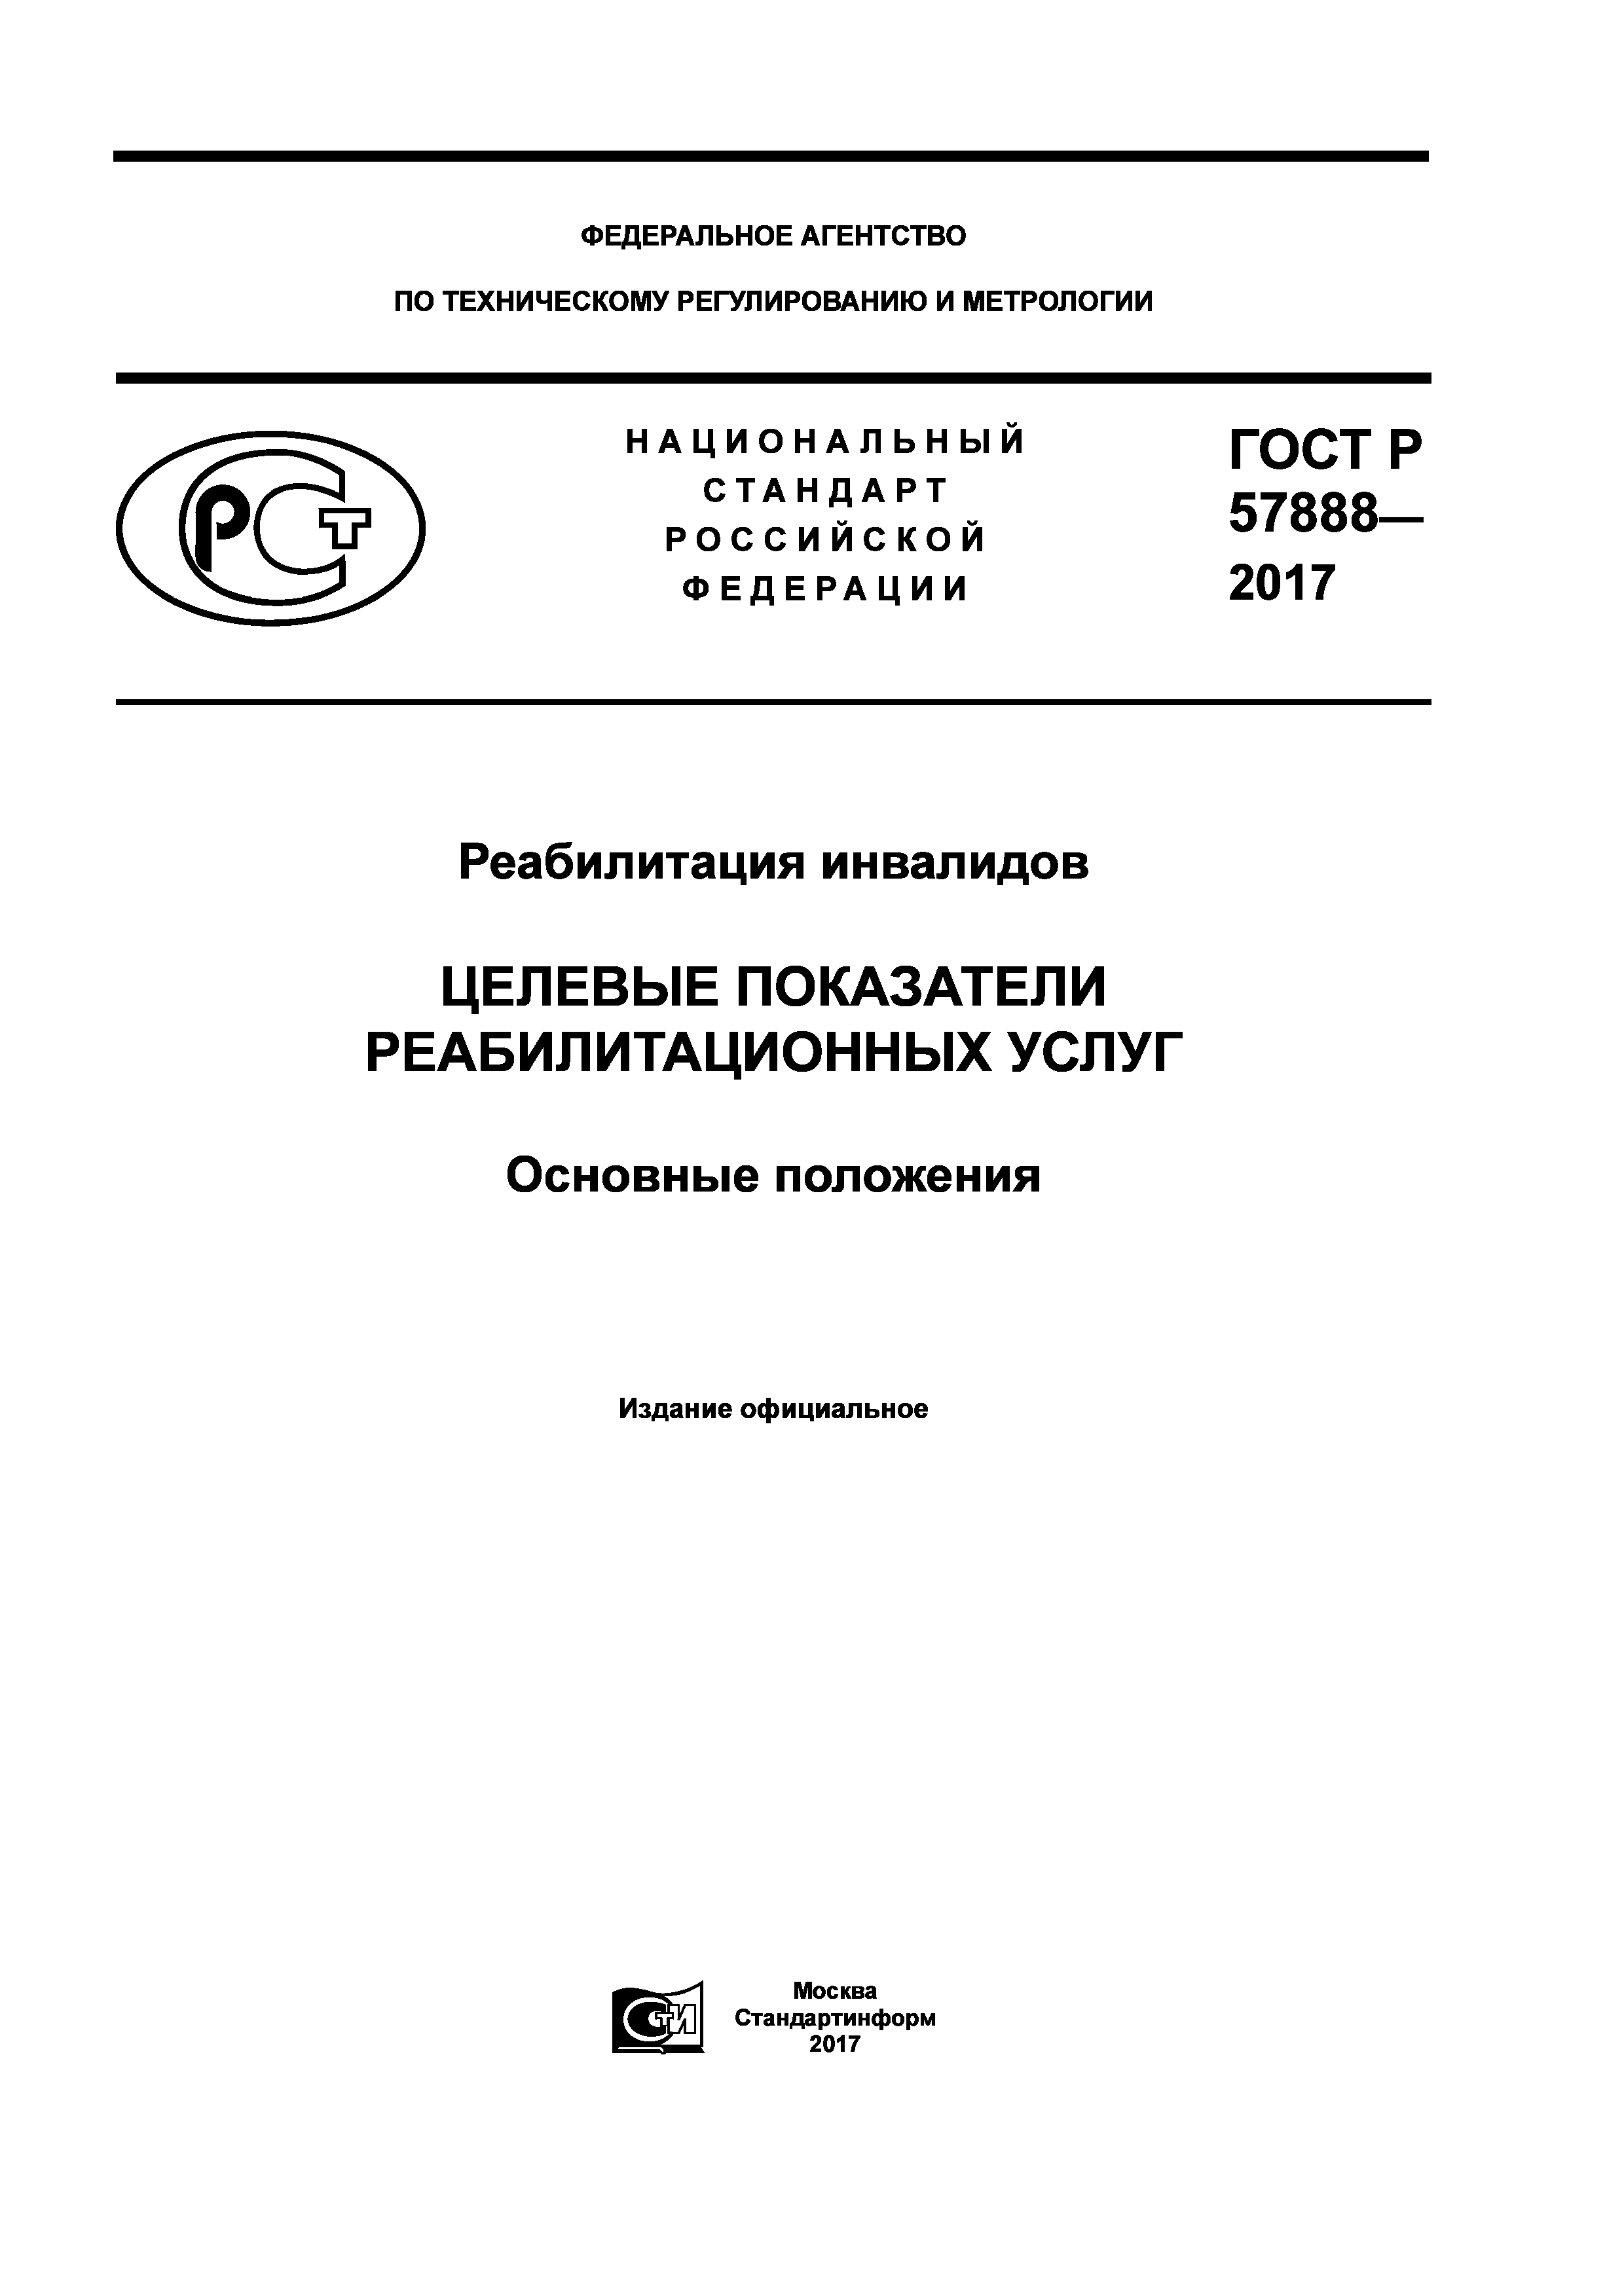 ГОСТ Р 57888-2017